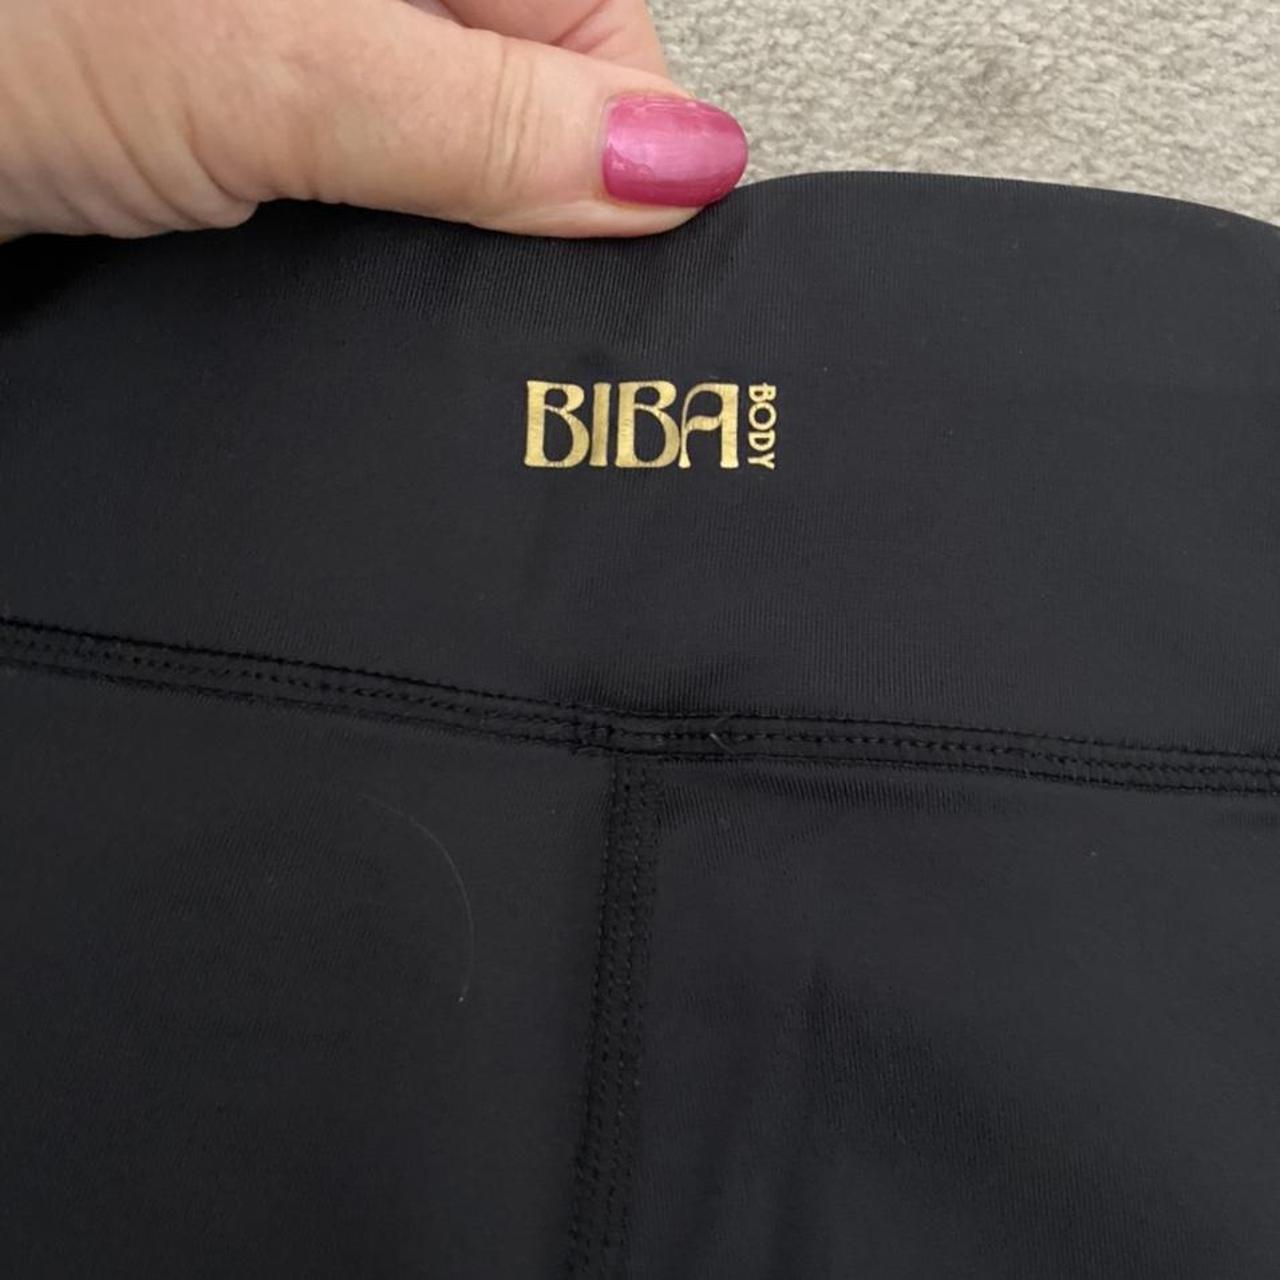 Biba Gym leggings black I have these in a medium - Depop